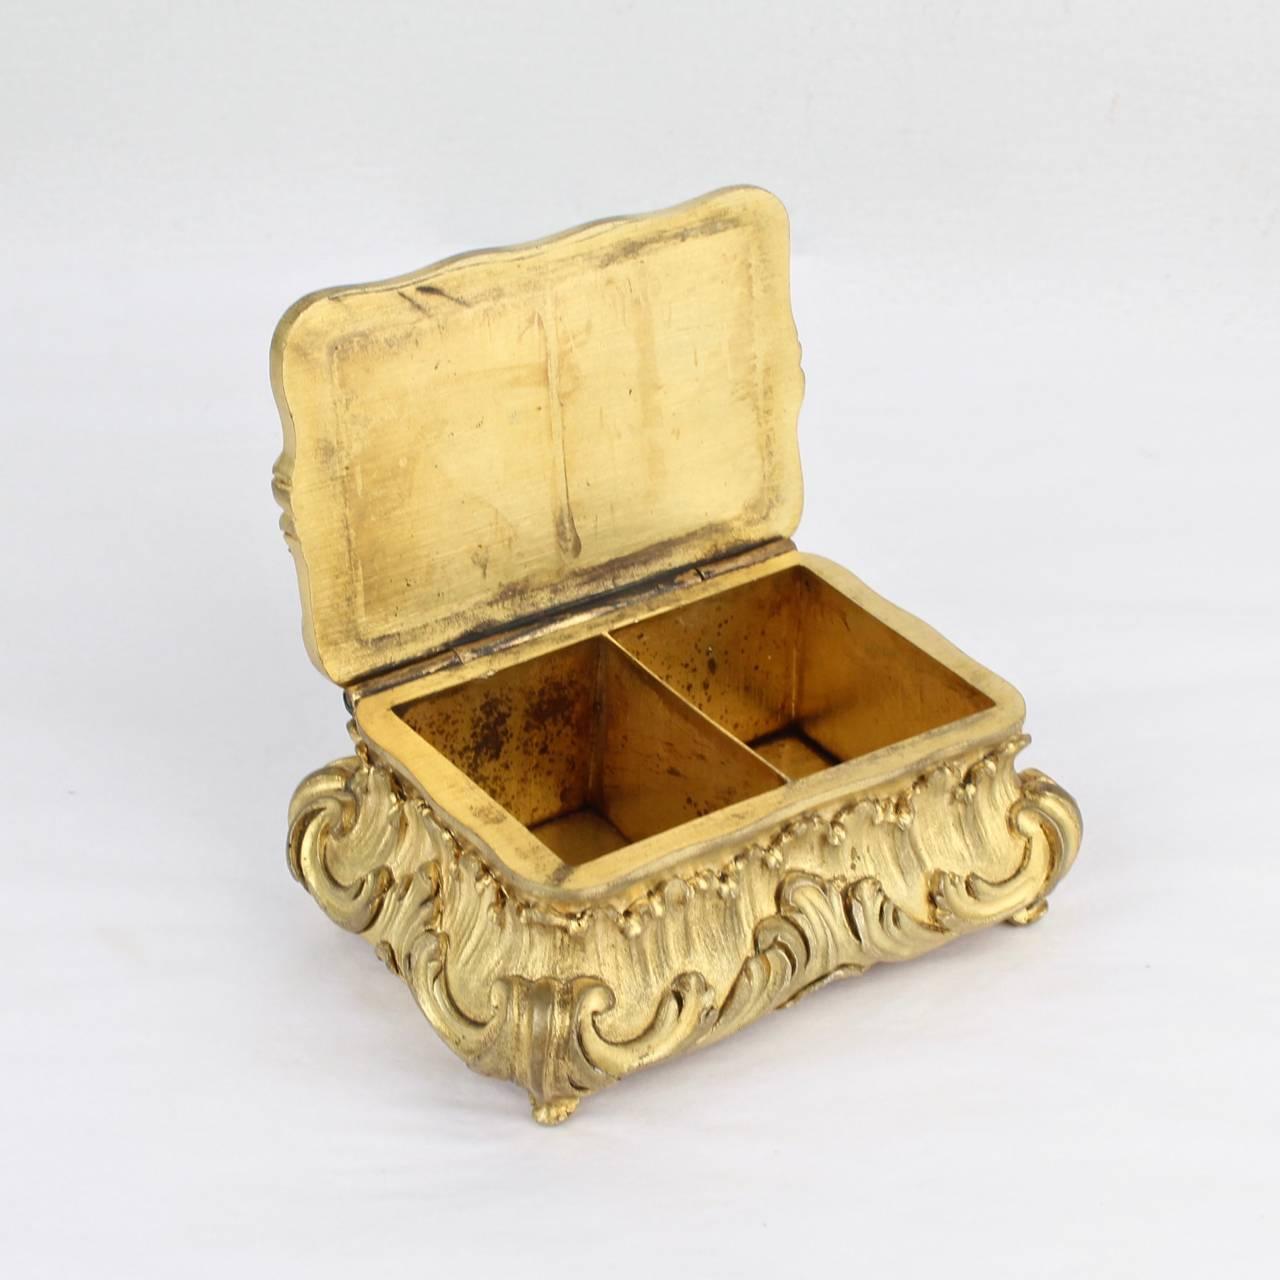 Antique Small Doré Gilt Bronze Table Box or Casket, 19th Century 1